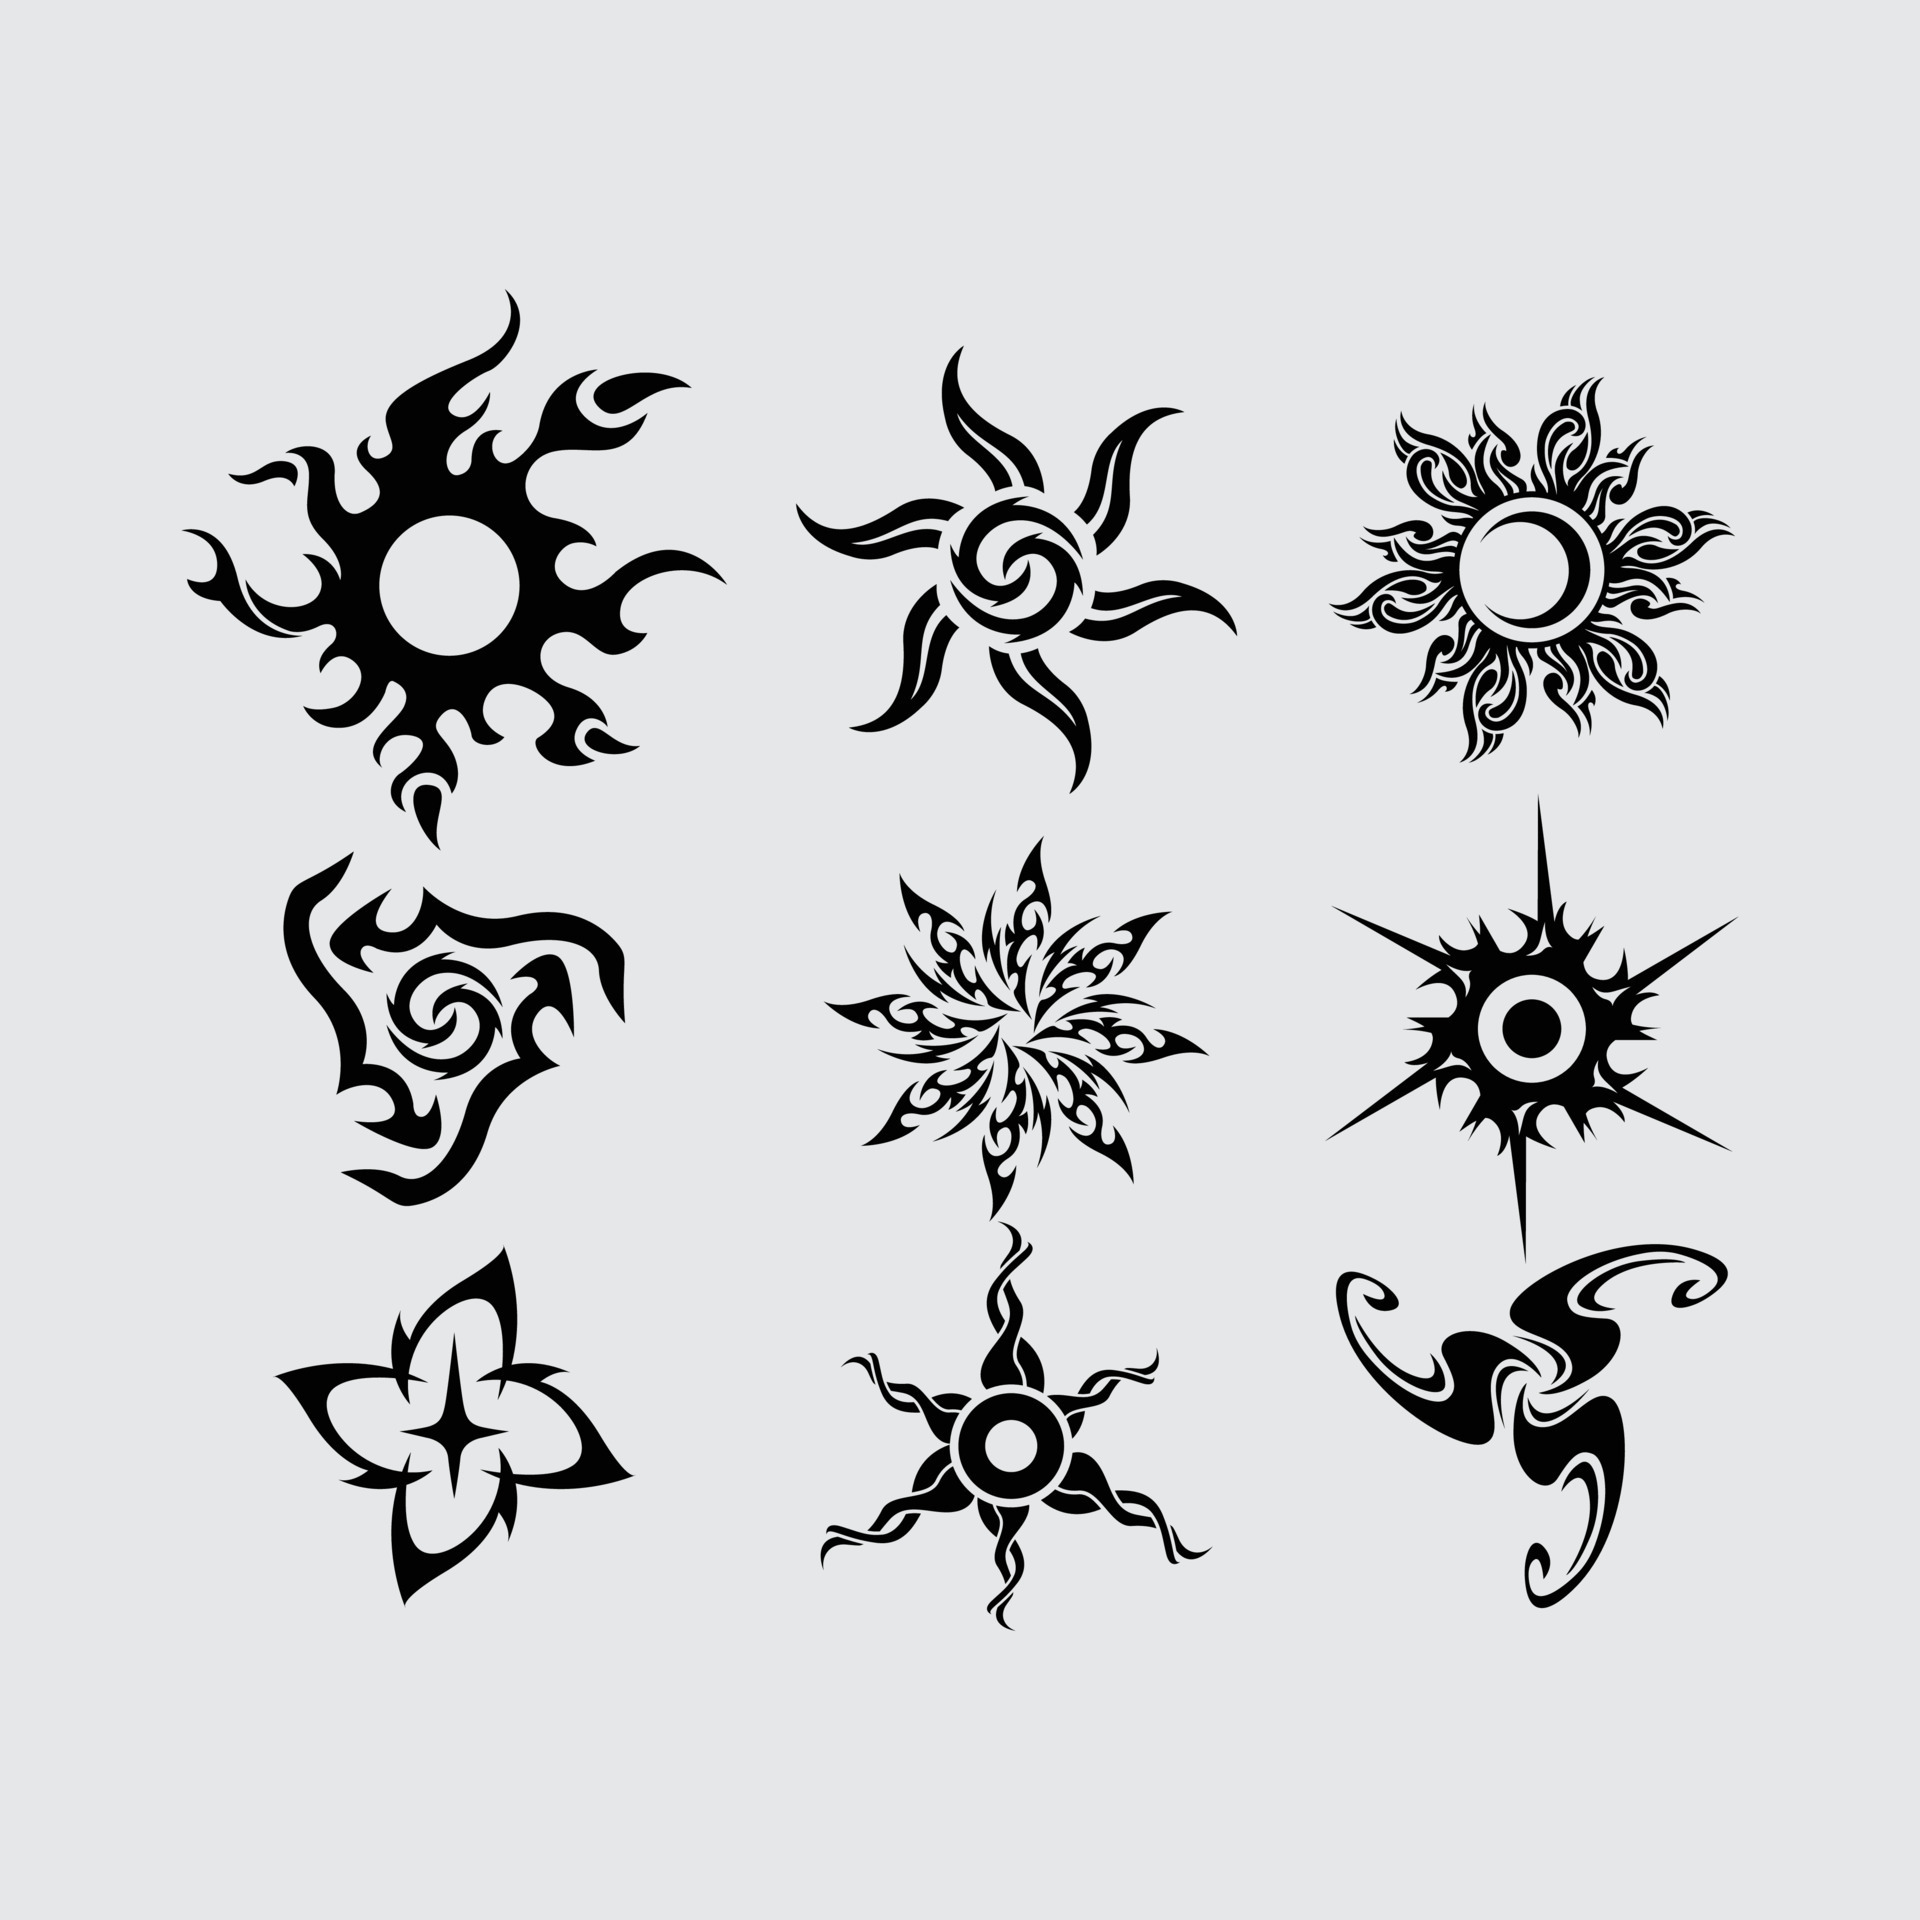 Spiral sun swirl tribal wrist tattoo illustration vector element ...